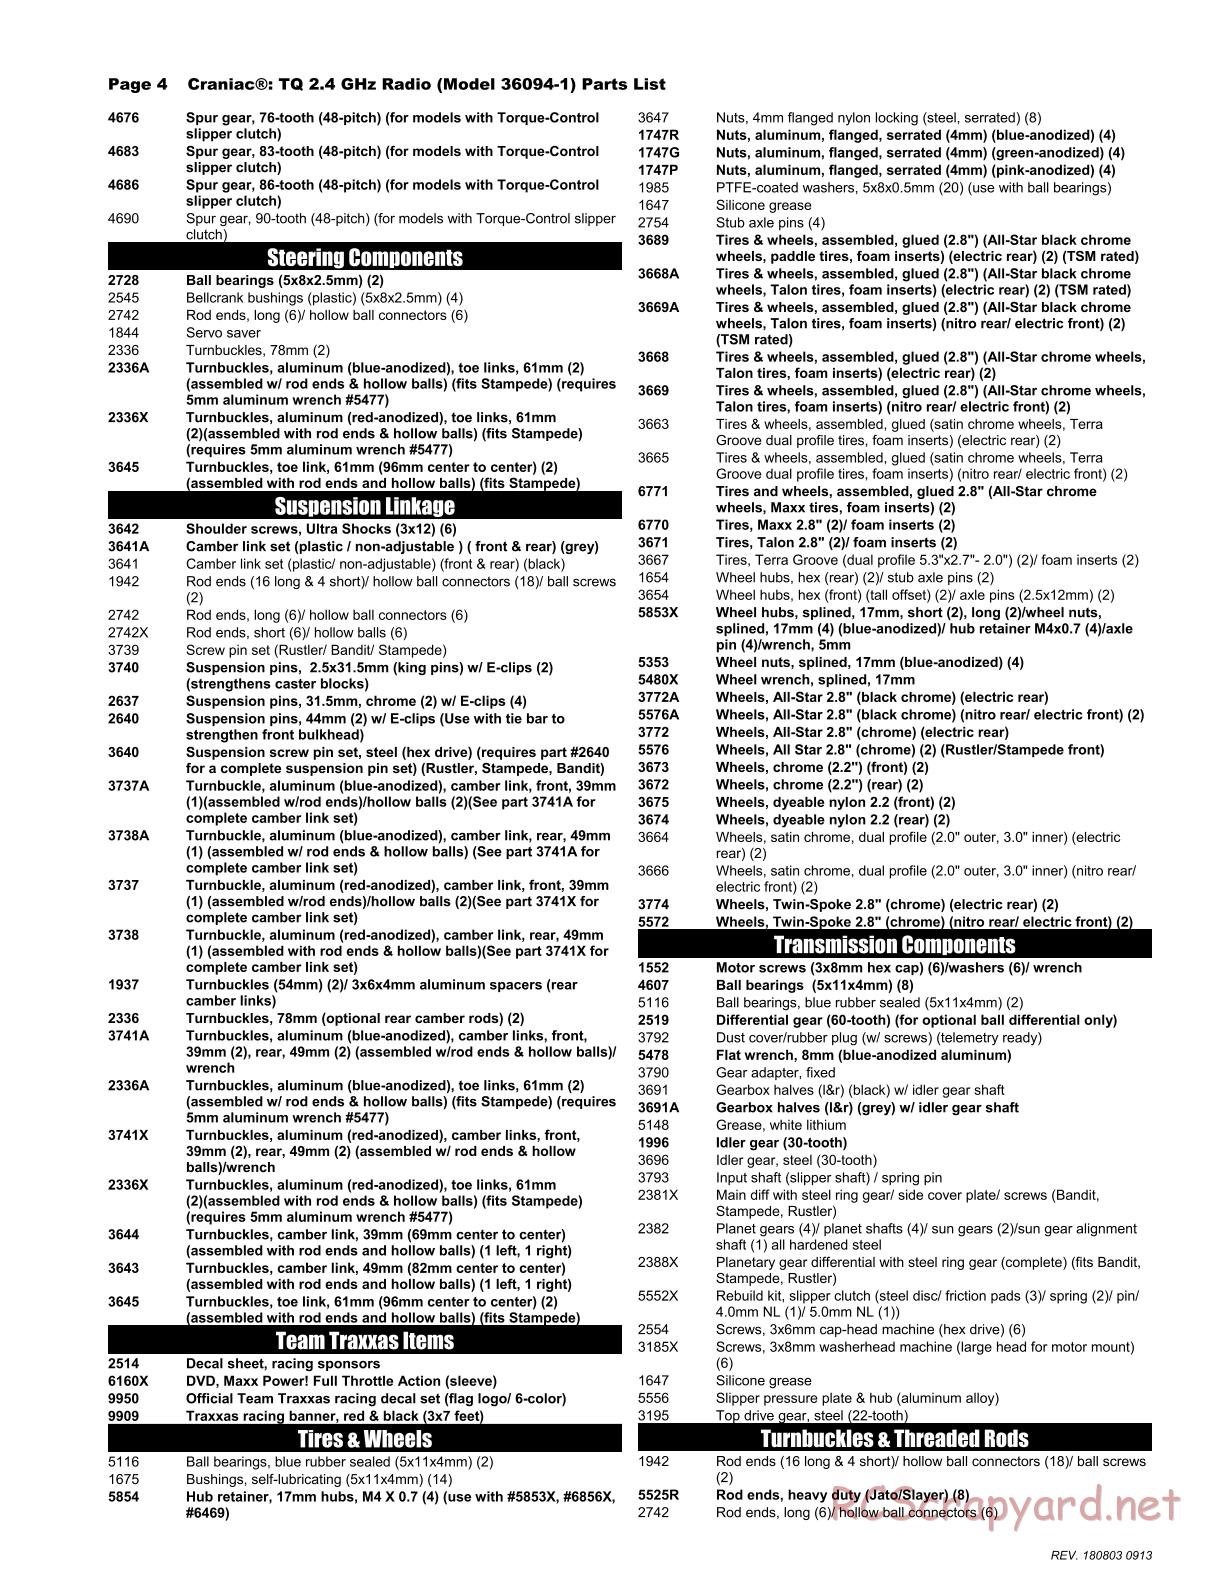 Traxxas - Craniac - Parts List - Page 4